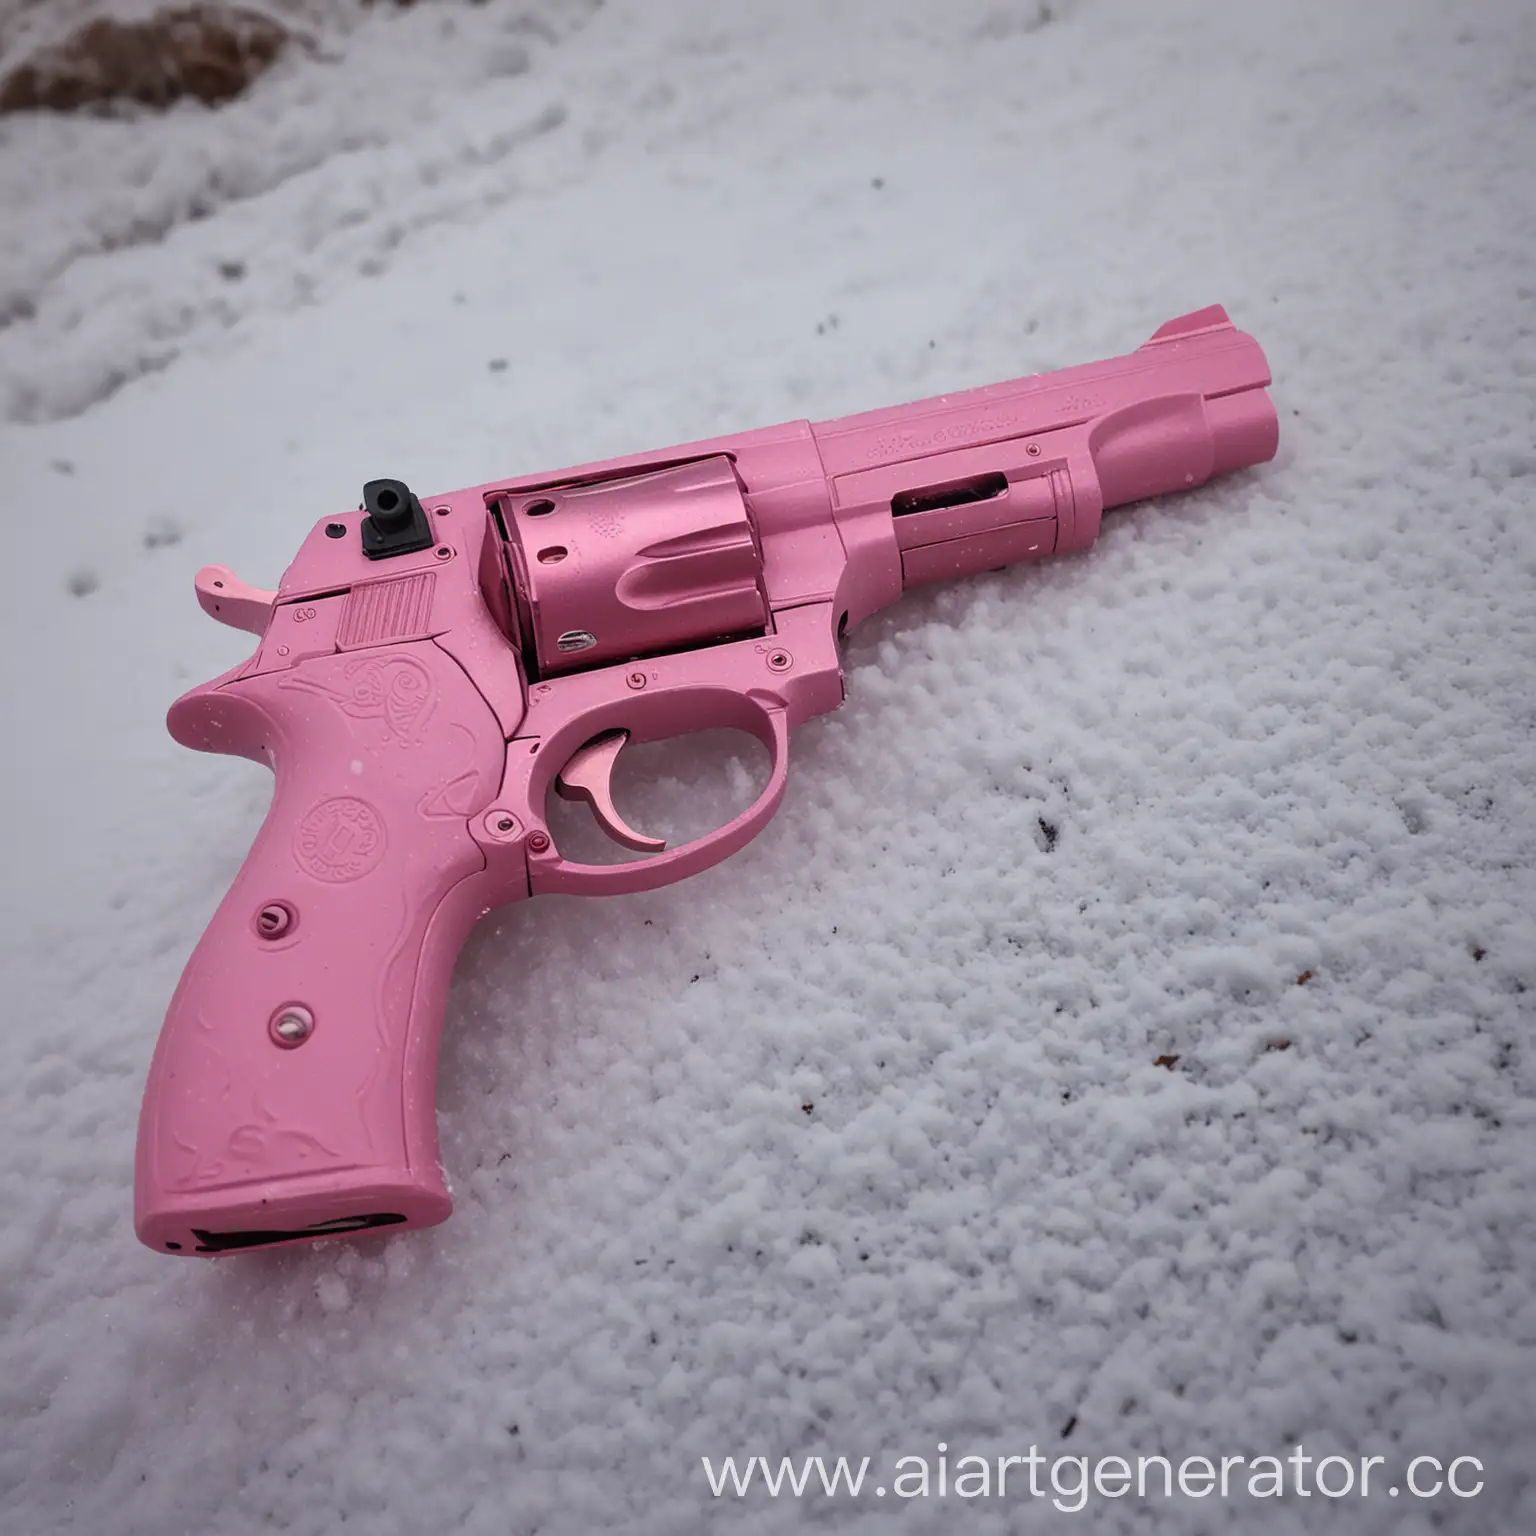 Cold-Pink-Pistol-in-Khrushchevka-Street-Scene